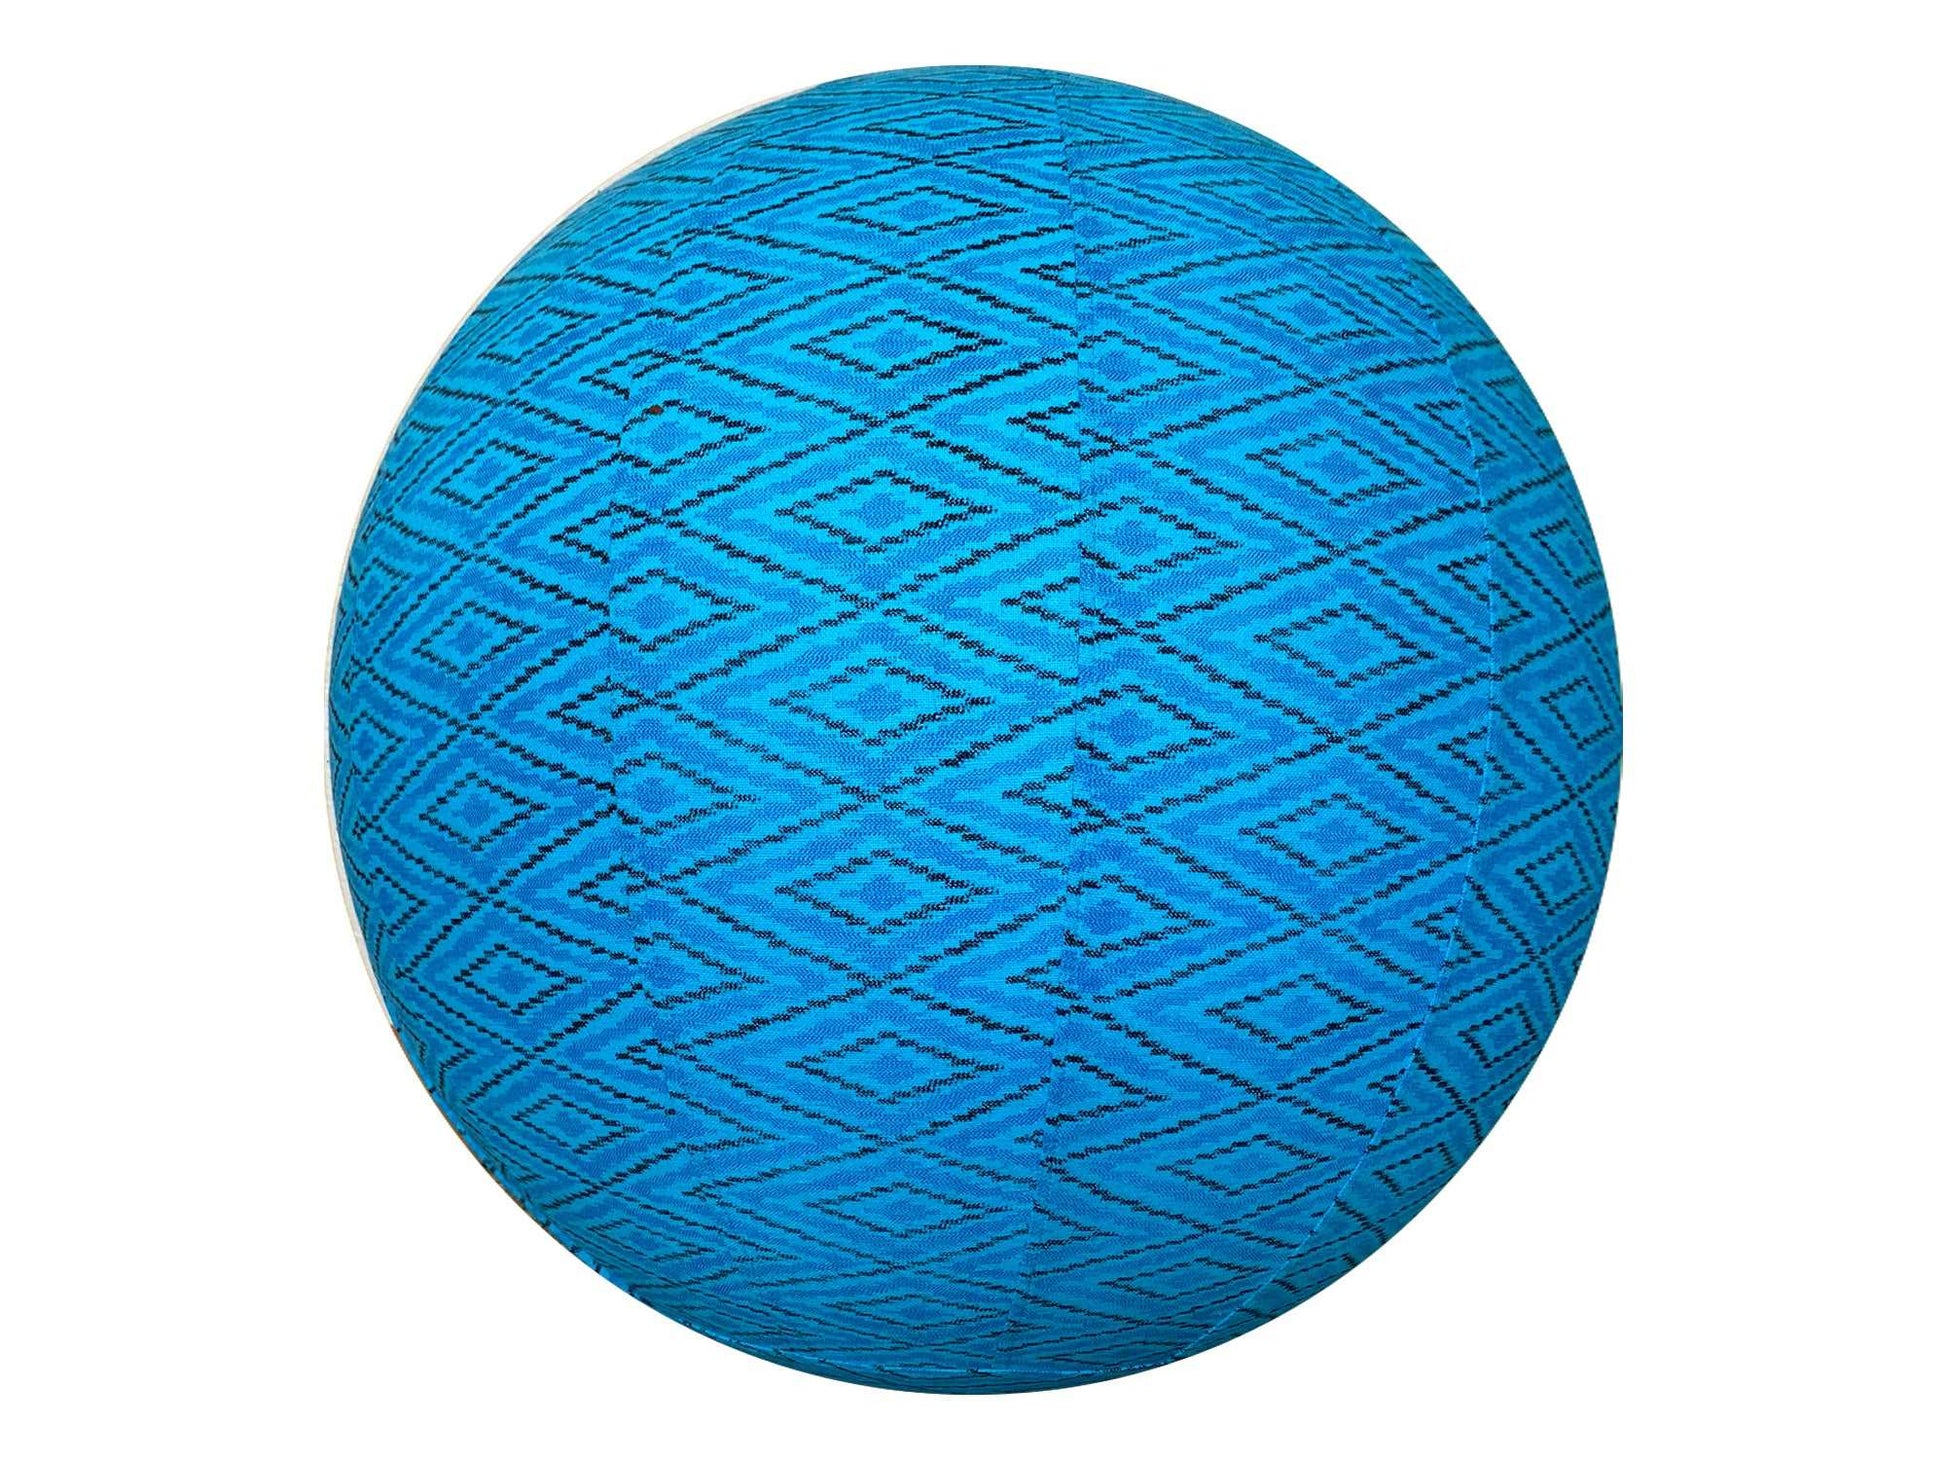 55cm Balance Ball / Yoga Ball Cover: Blue Diamond